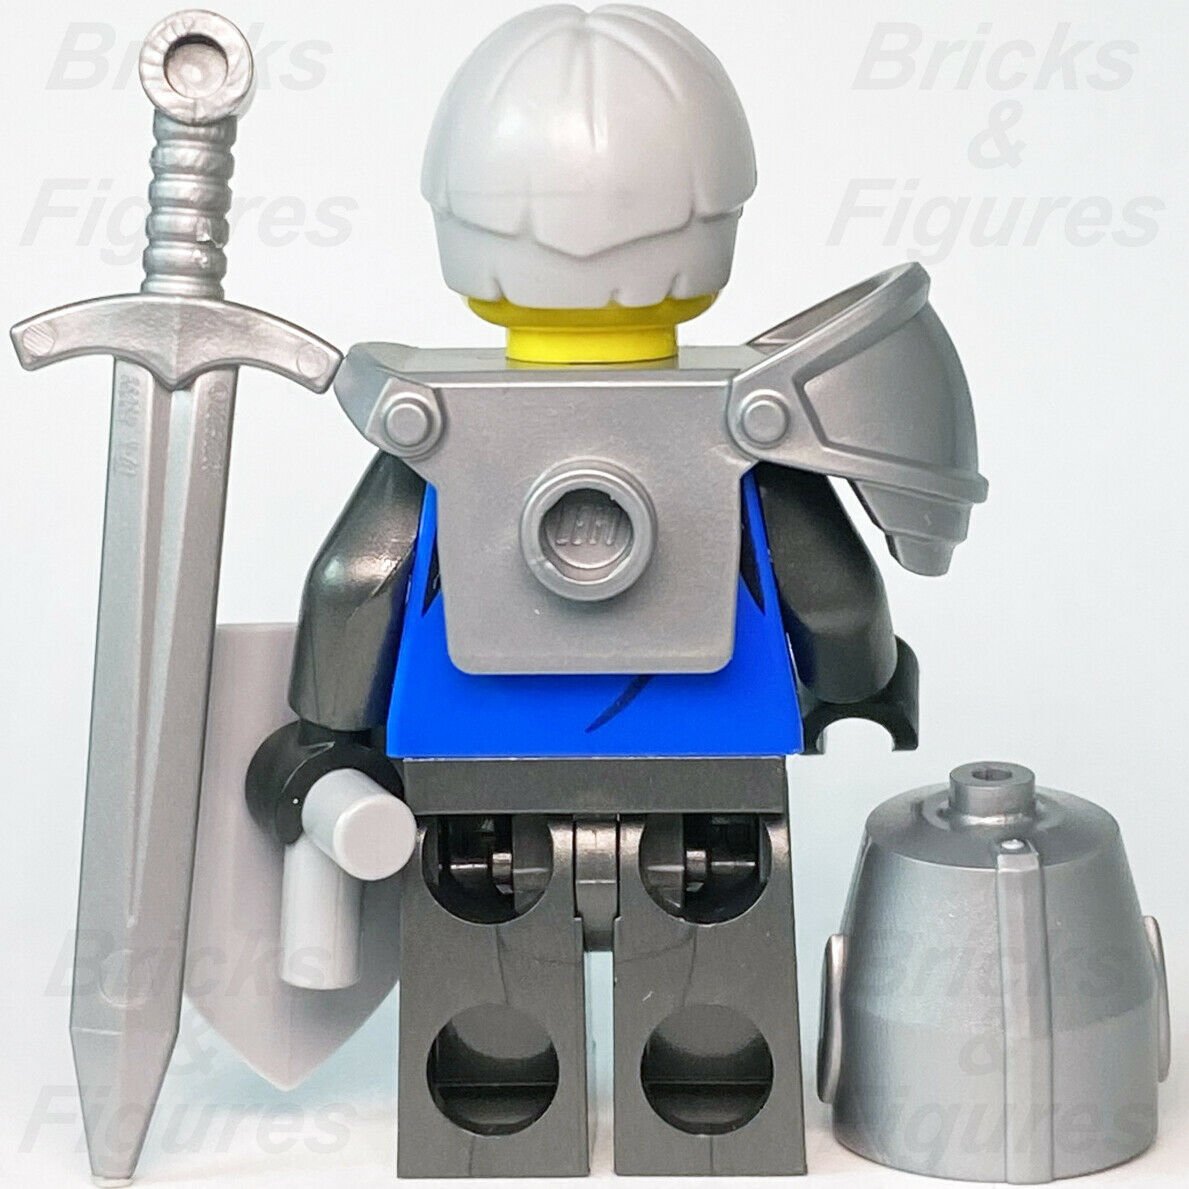 New Ideas LEGO Black Falcon Knight Male Minifigure with Sword & Shield 21325 - Bricks & Figures